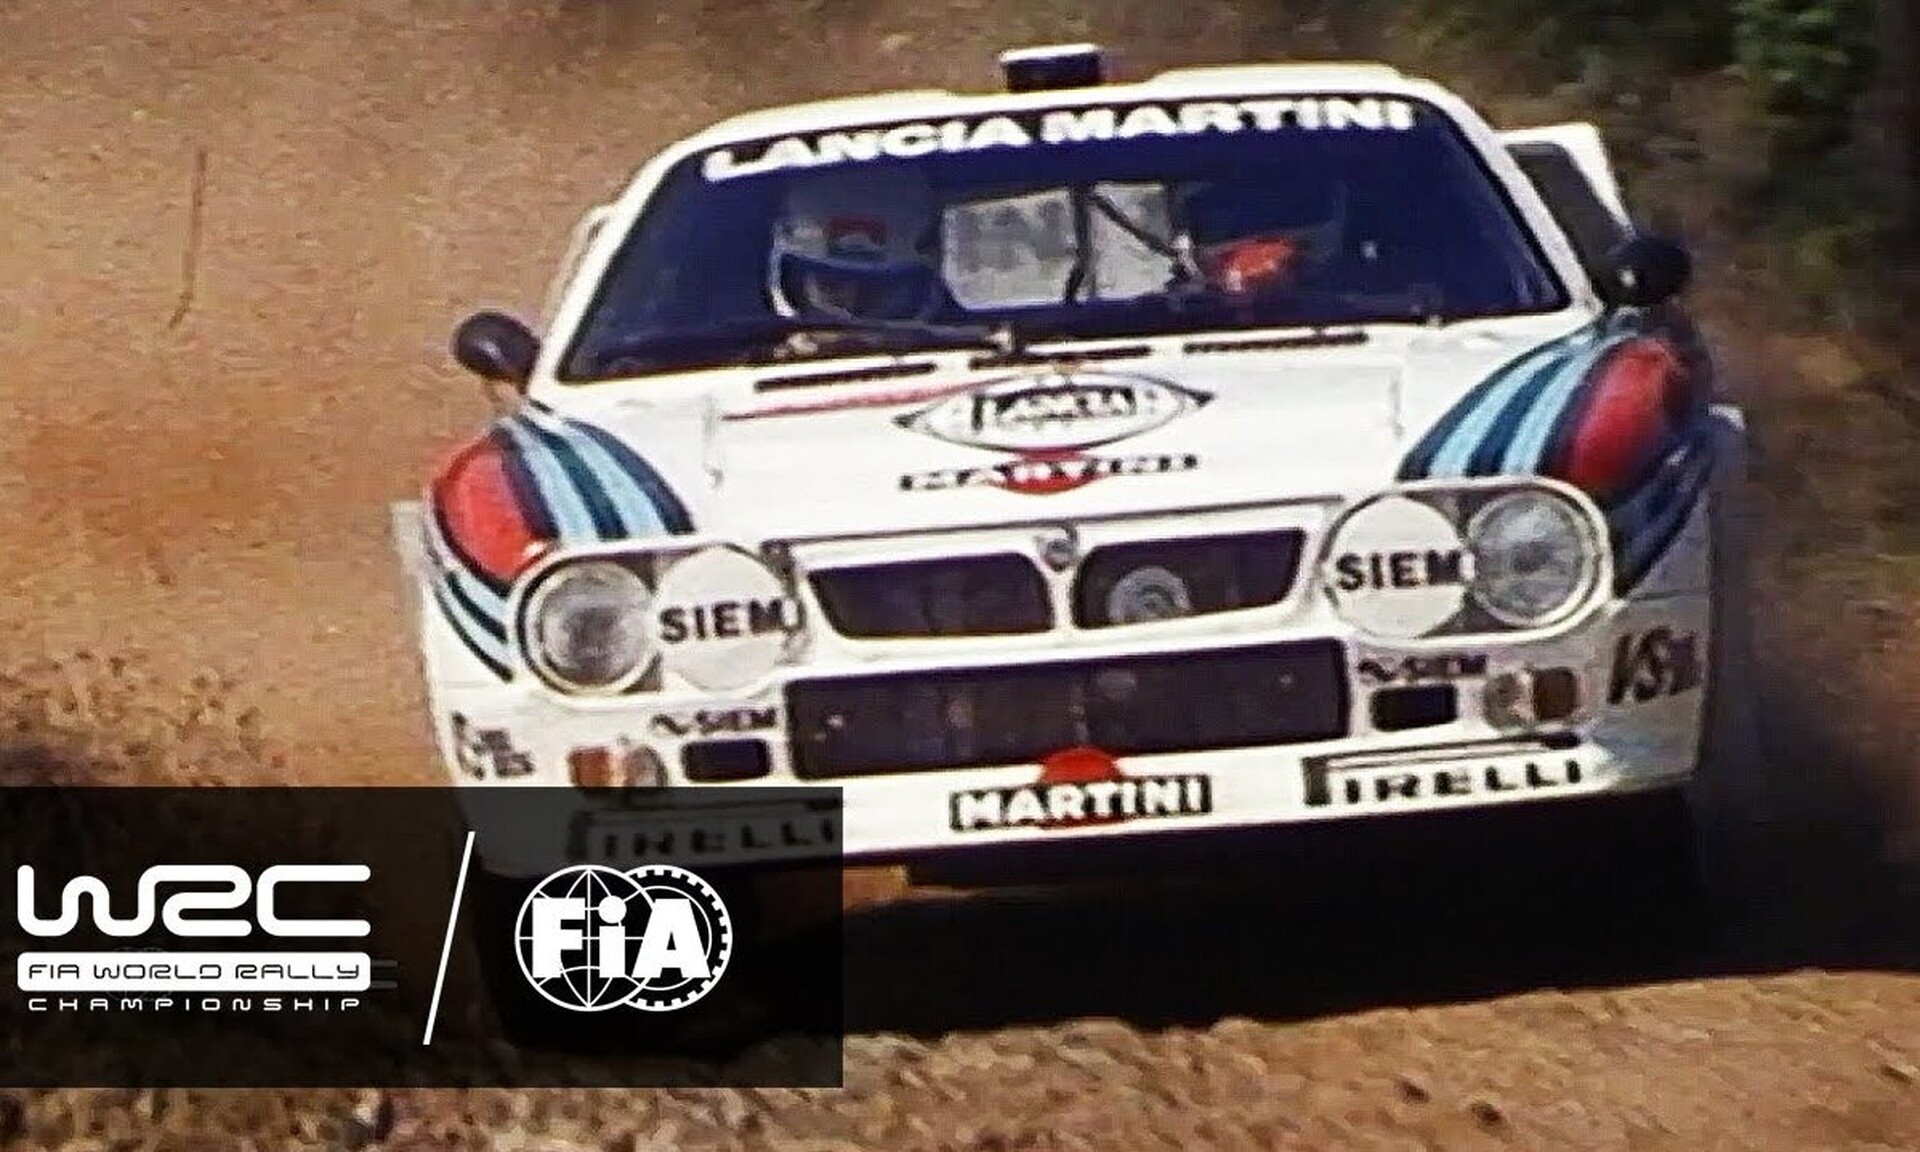 WRC: Η ιστορική Lancia θέλει να επιστρέψει μετά από 33 χρόνια!